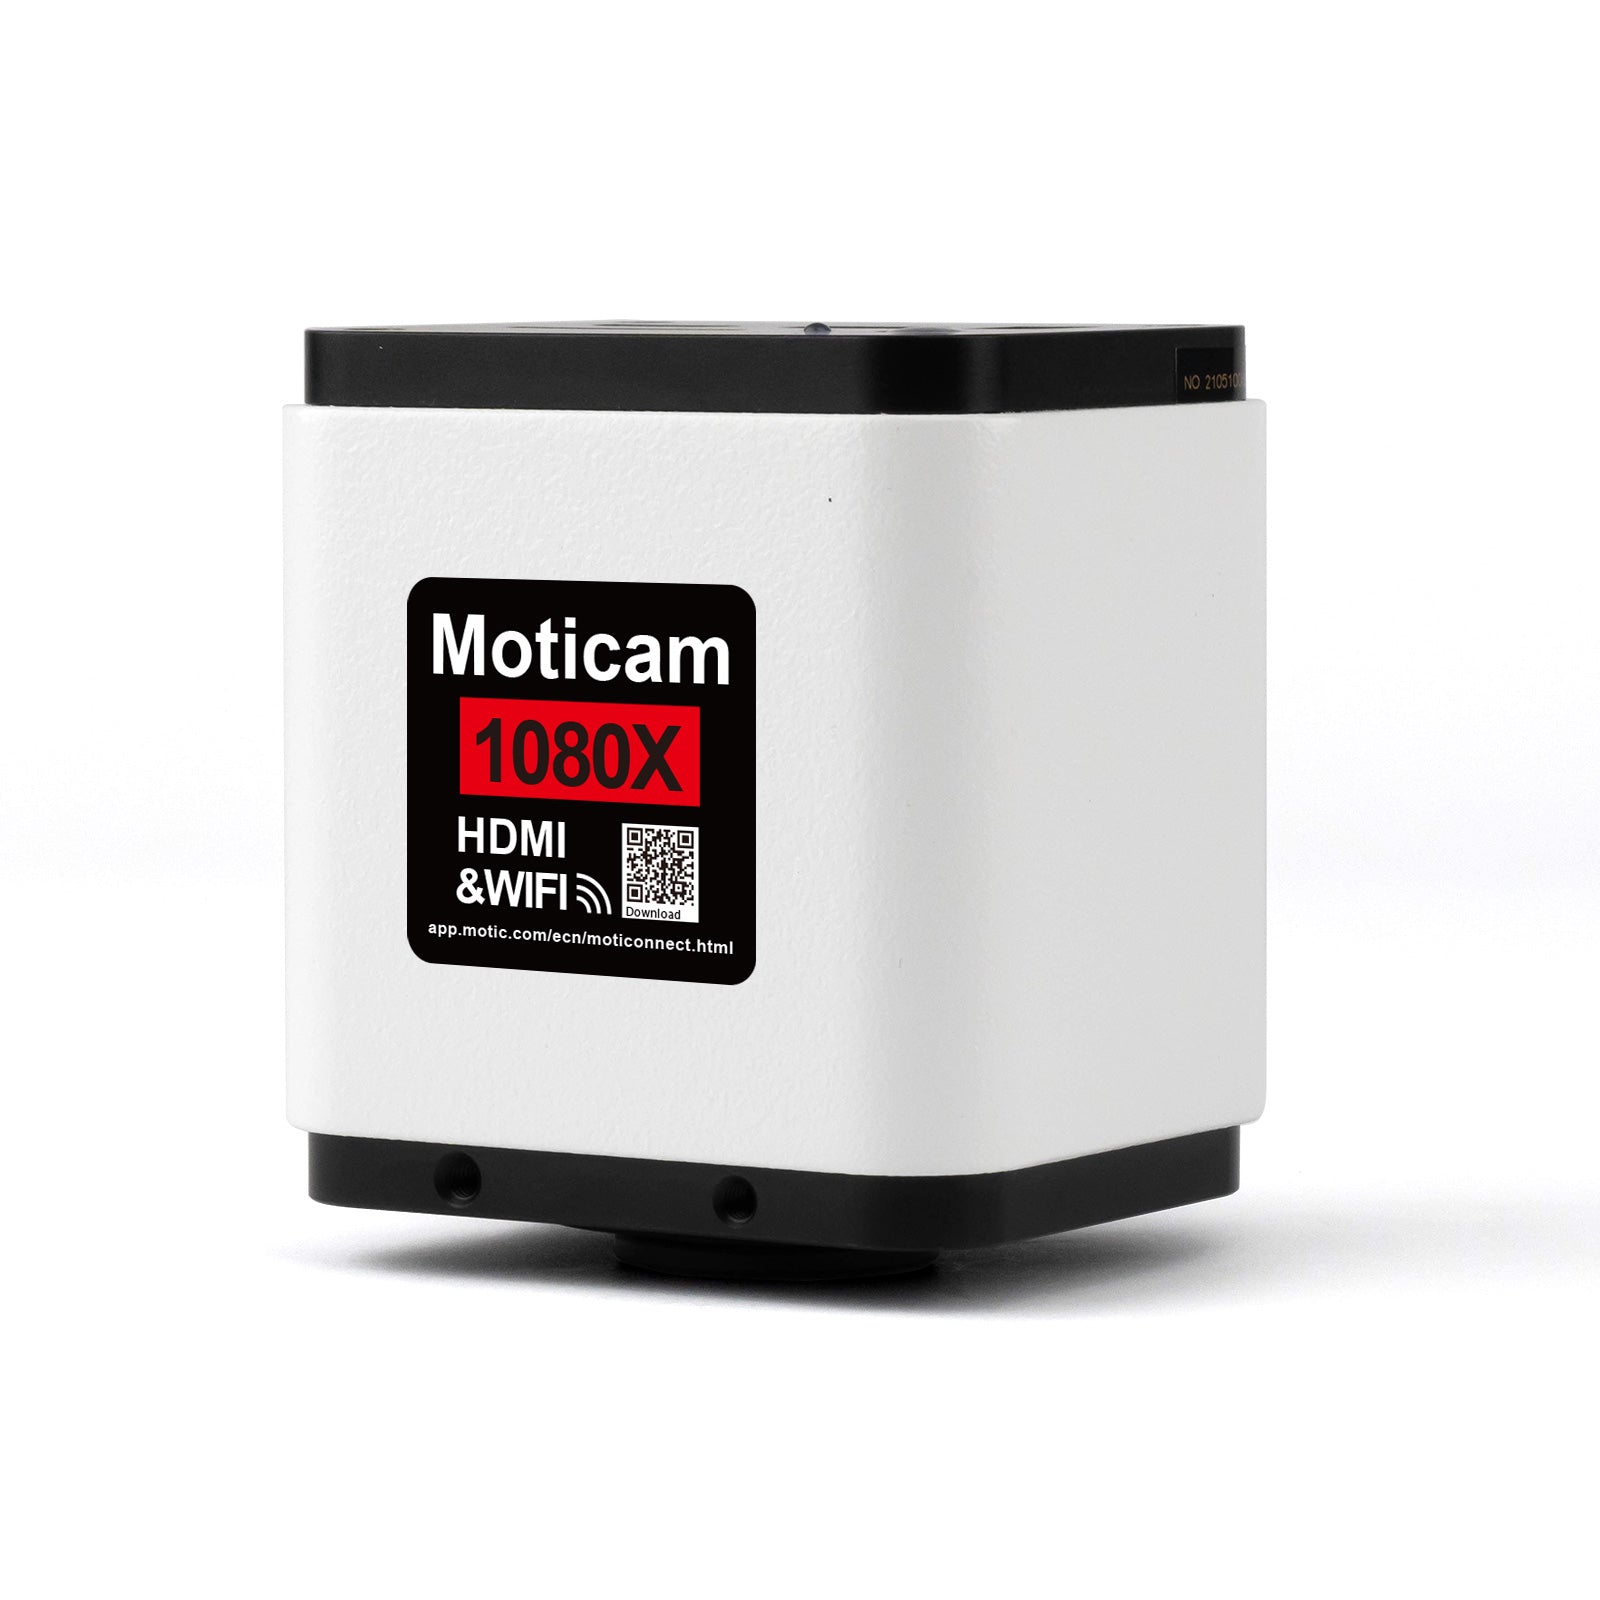 Multiport HDMI/WiFi/USB Microscope Camera - MOTICAM 1080X